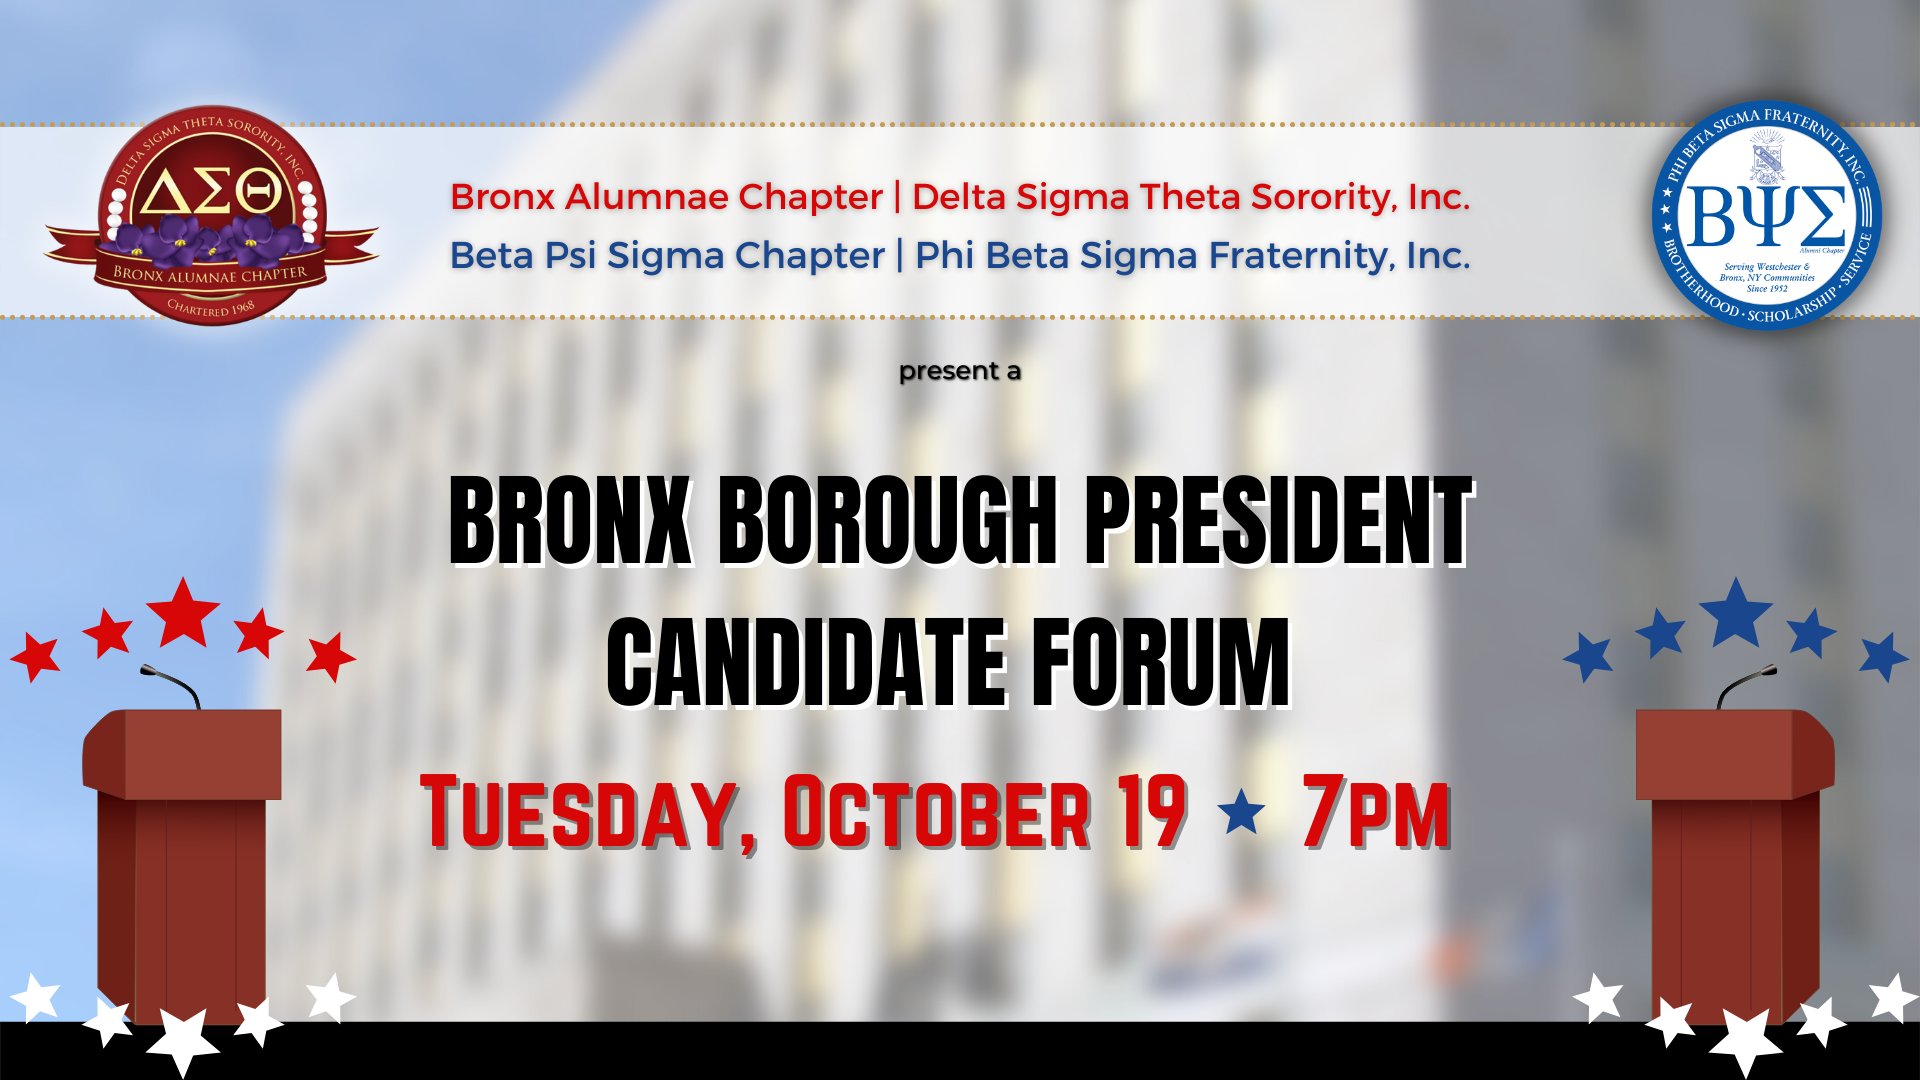 Bronx Borough President Candidate Forum_Slide_10.19.21